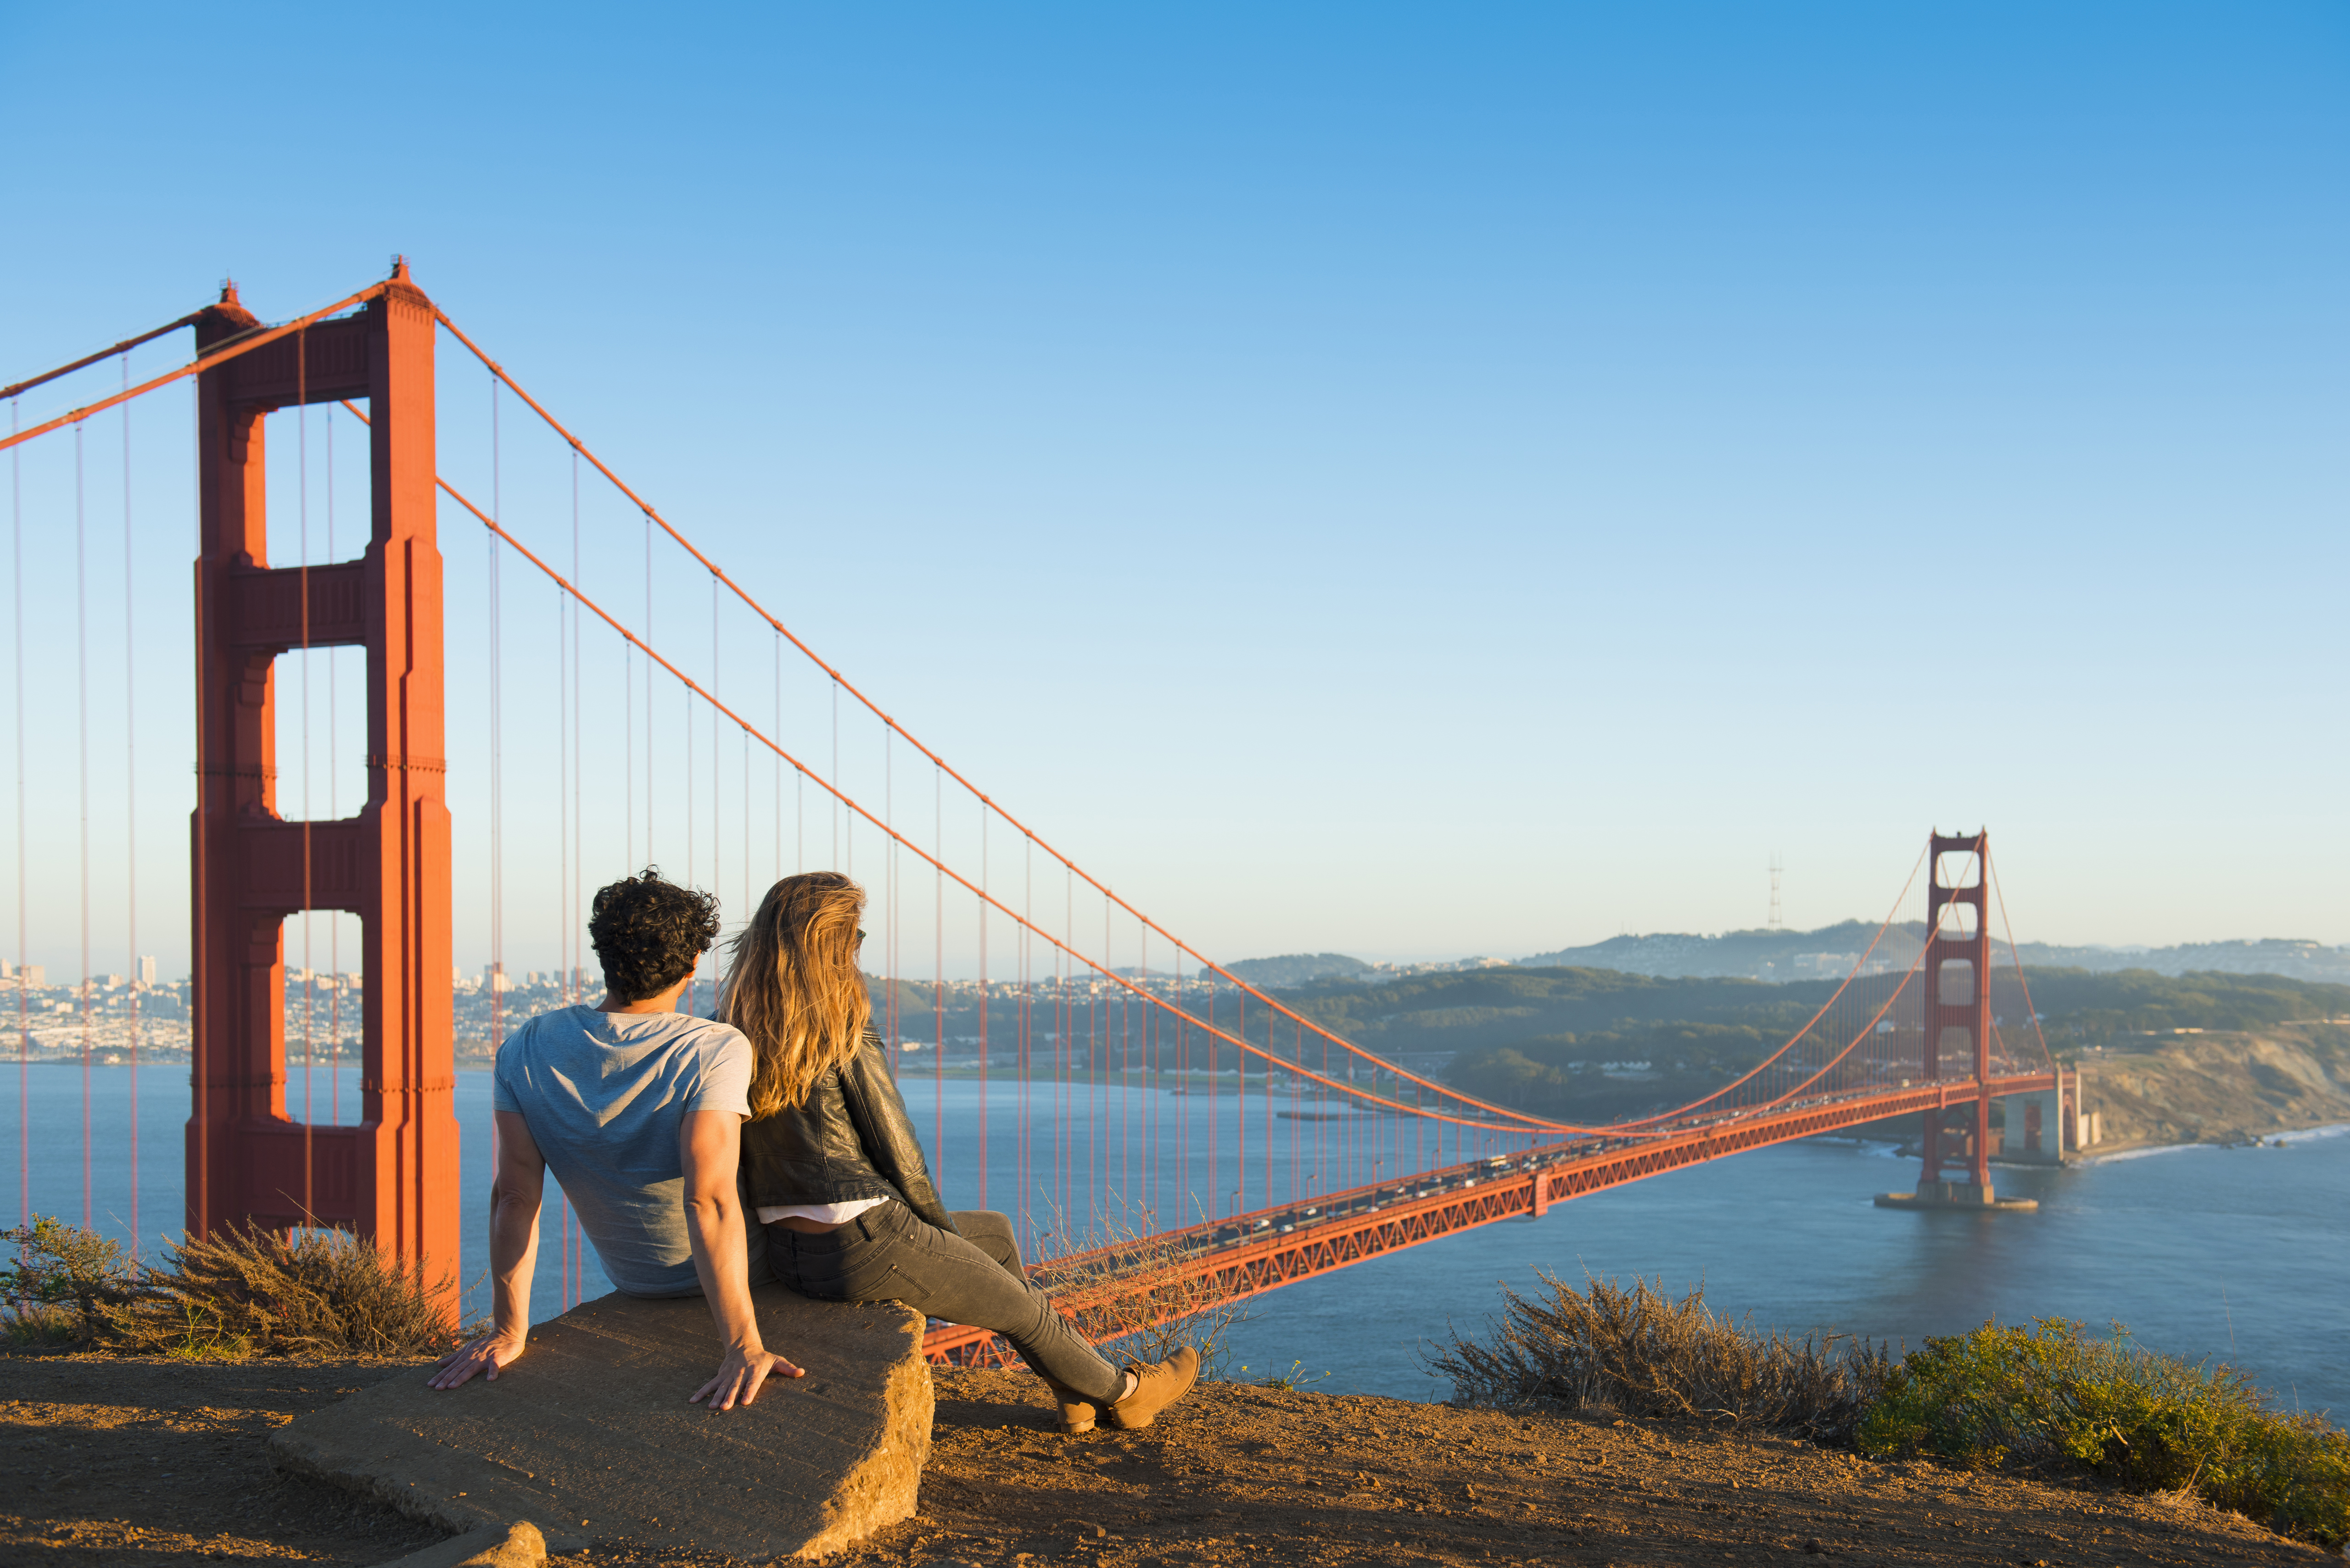 We were traveling. Мост золотые ворота в Сан-Франциско. Сан-Франциско (Калифорния). Мост золотые ворота Сан-Франциско туристы. Мост «золотые ворота», Сан-Франциско, Калифорния, США.